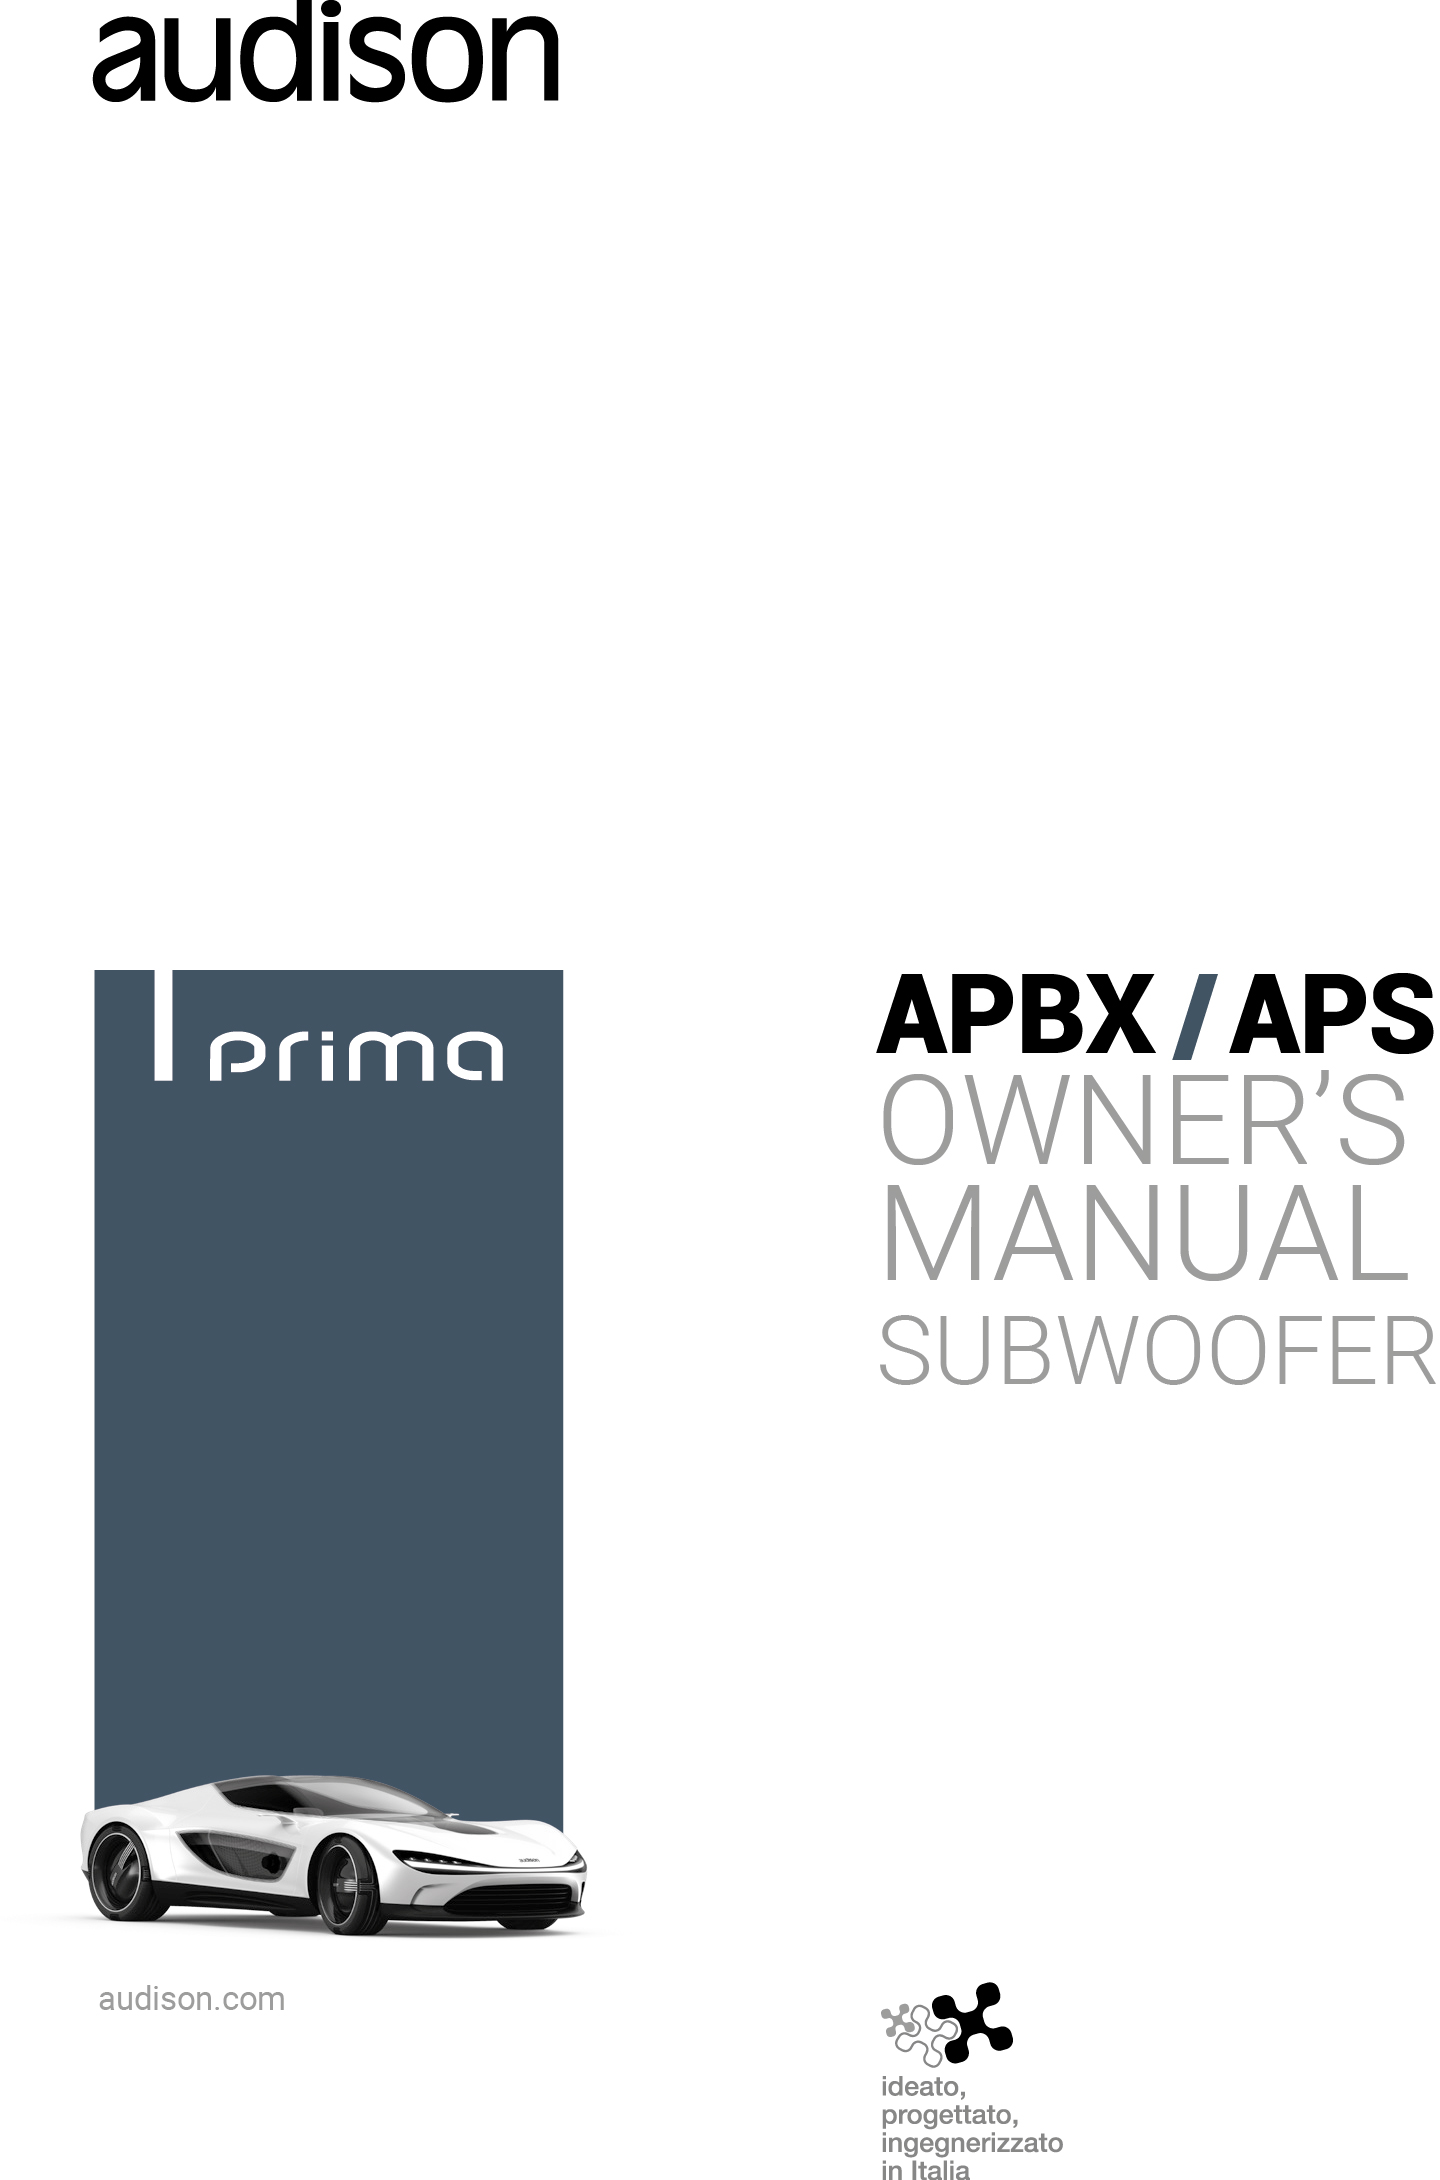 JBL009_Audison_PRIMA_APBX-APS_Owner_Manual_revN_x_web.jpg